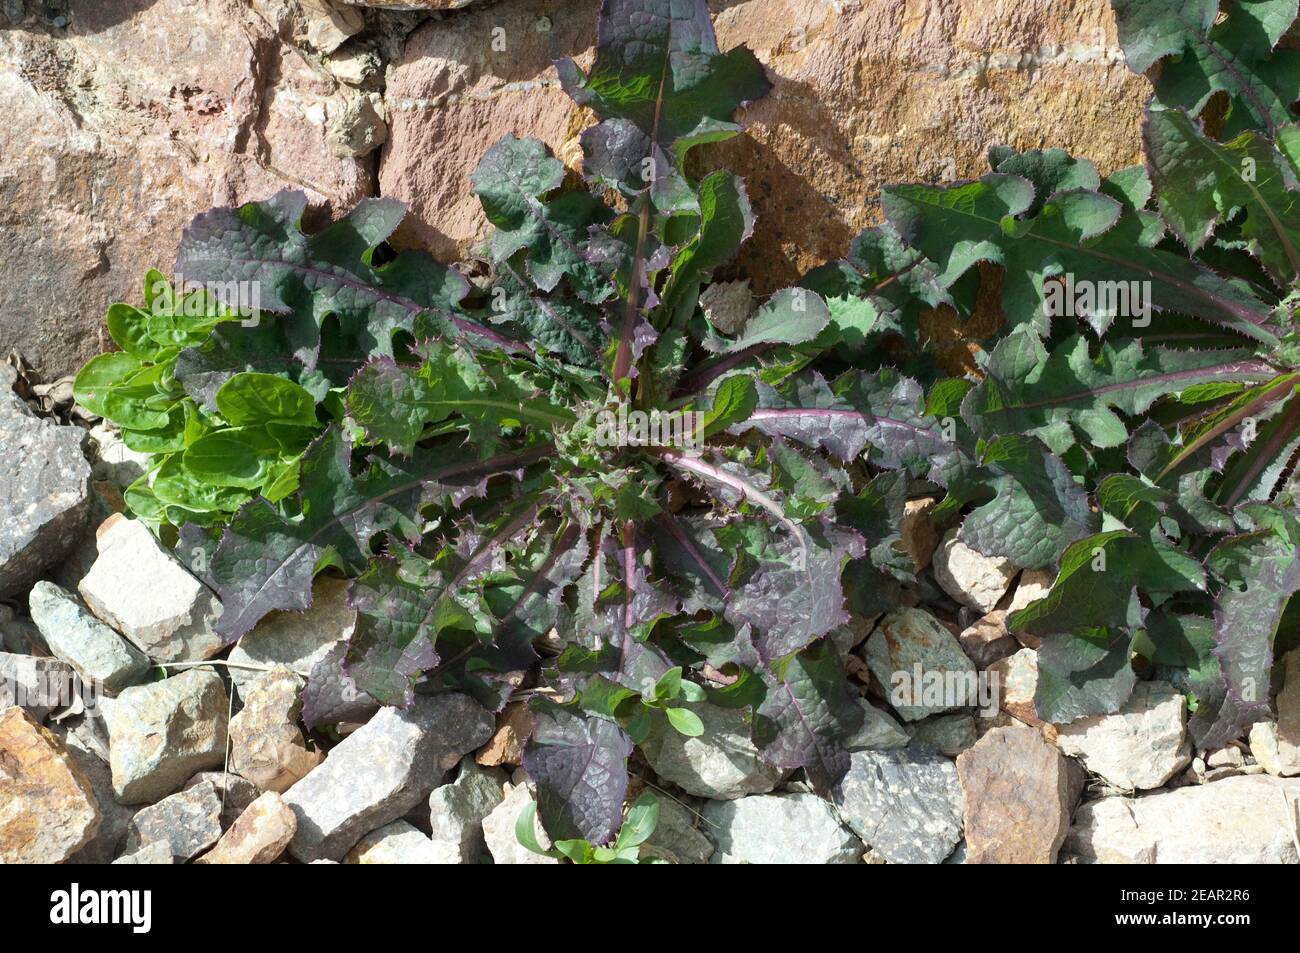 Kohldistel, Jungpflanze, Sonchus oleraceus Stock Photo